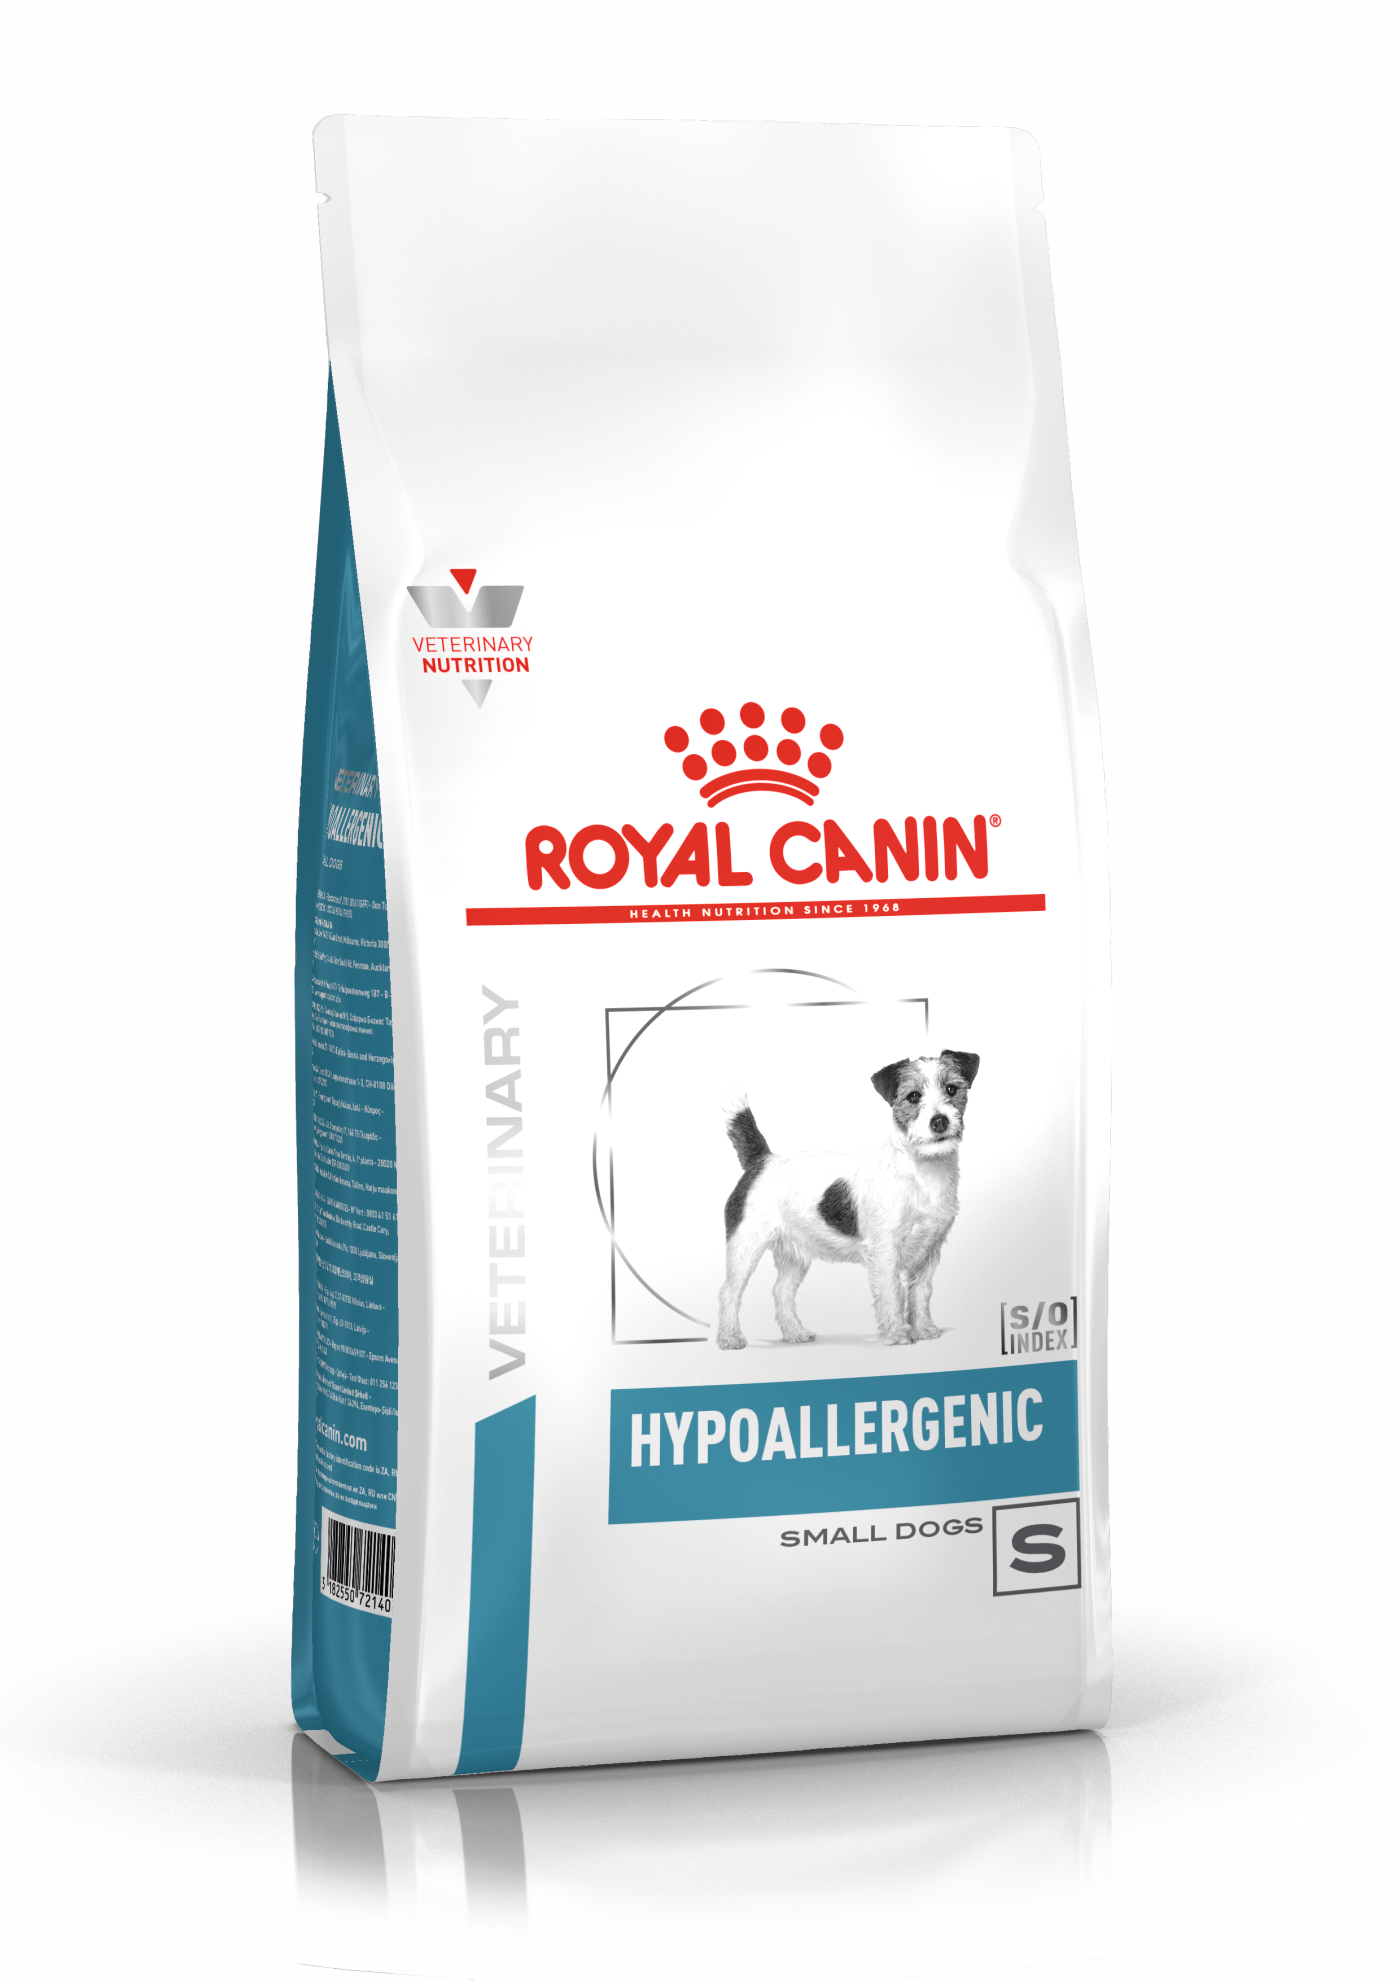 royal canin dental small dog